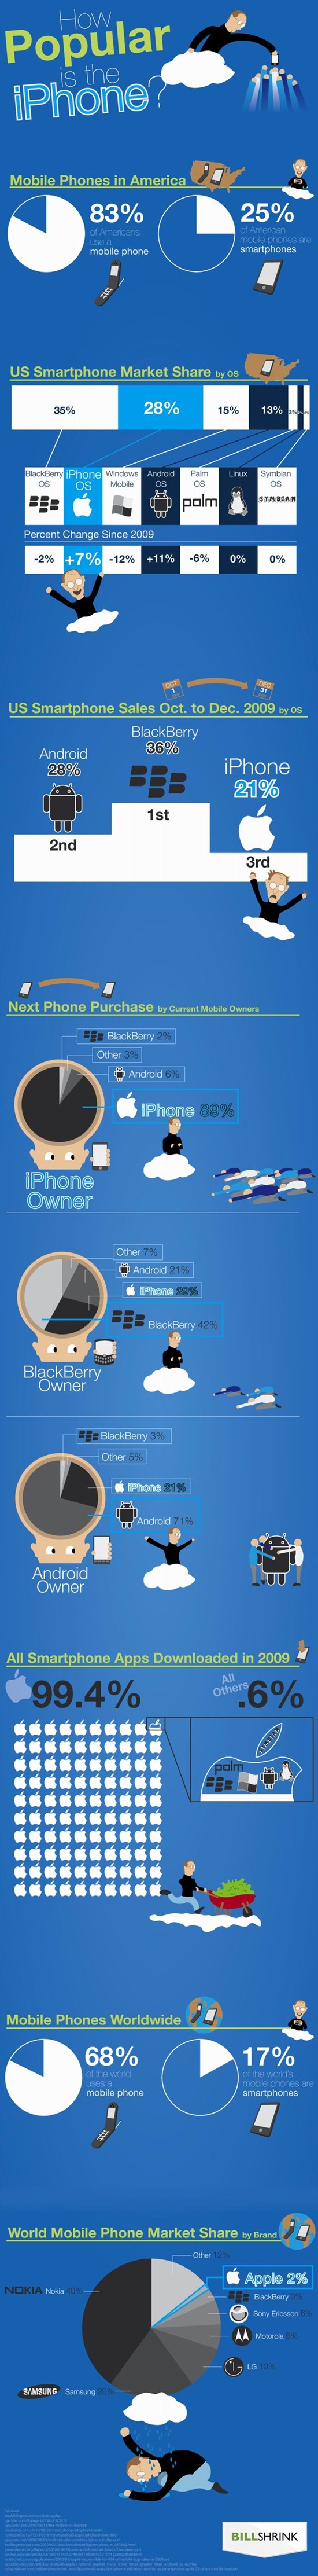 iPhone_infographic.jpg